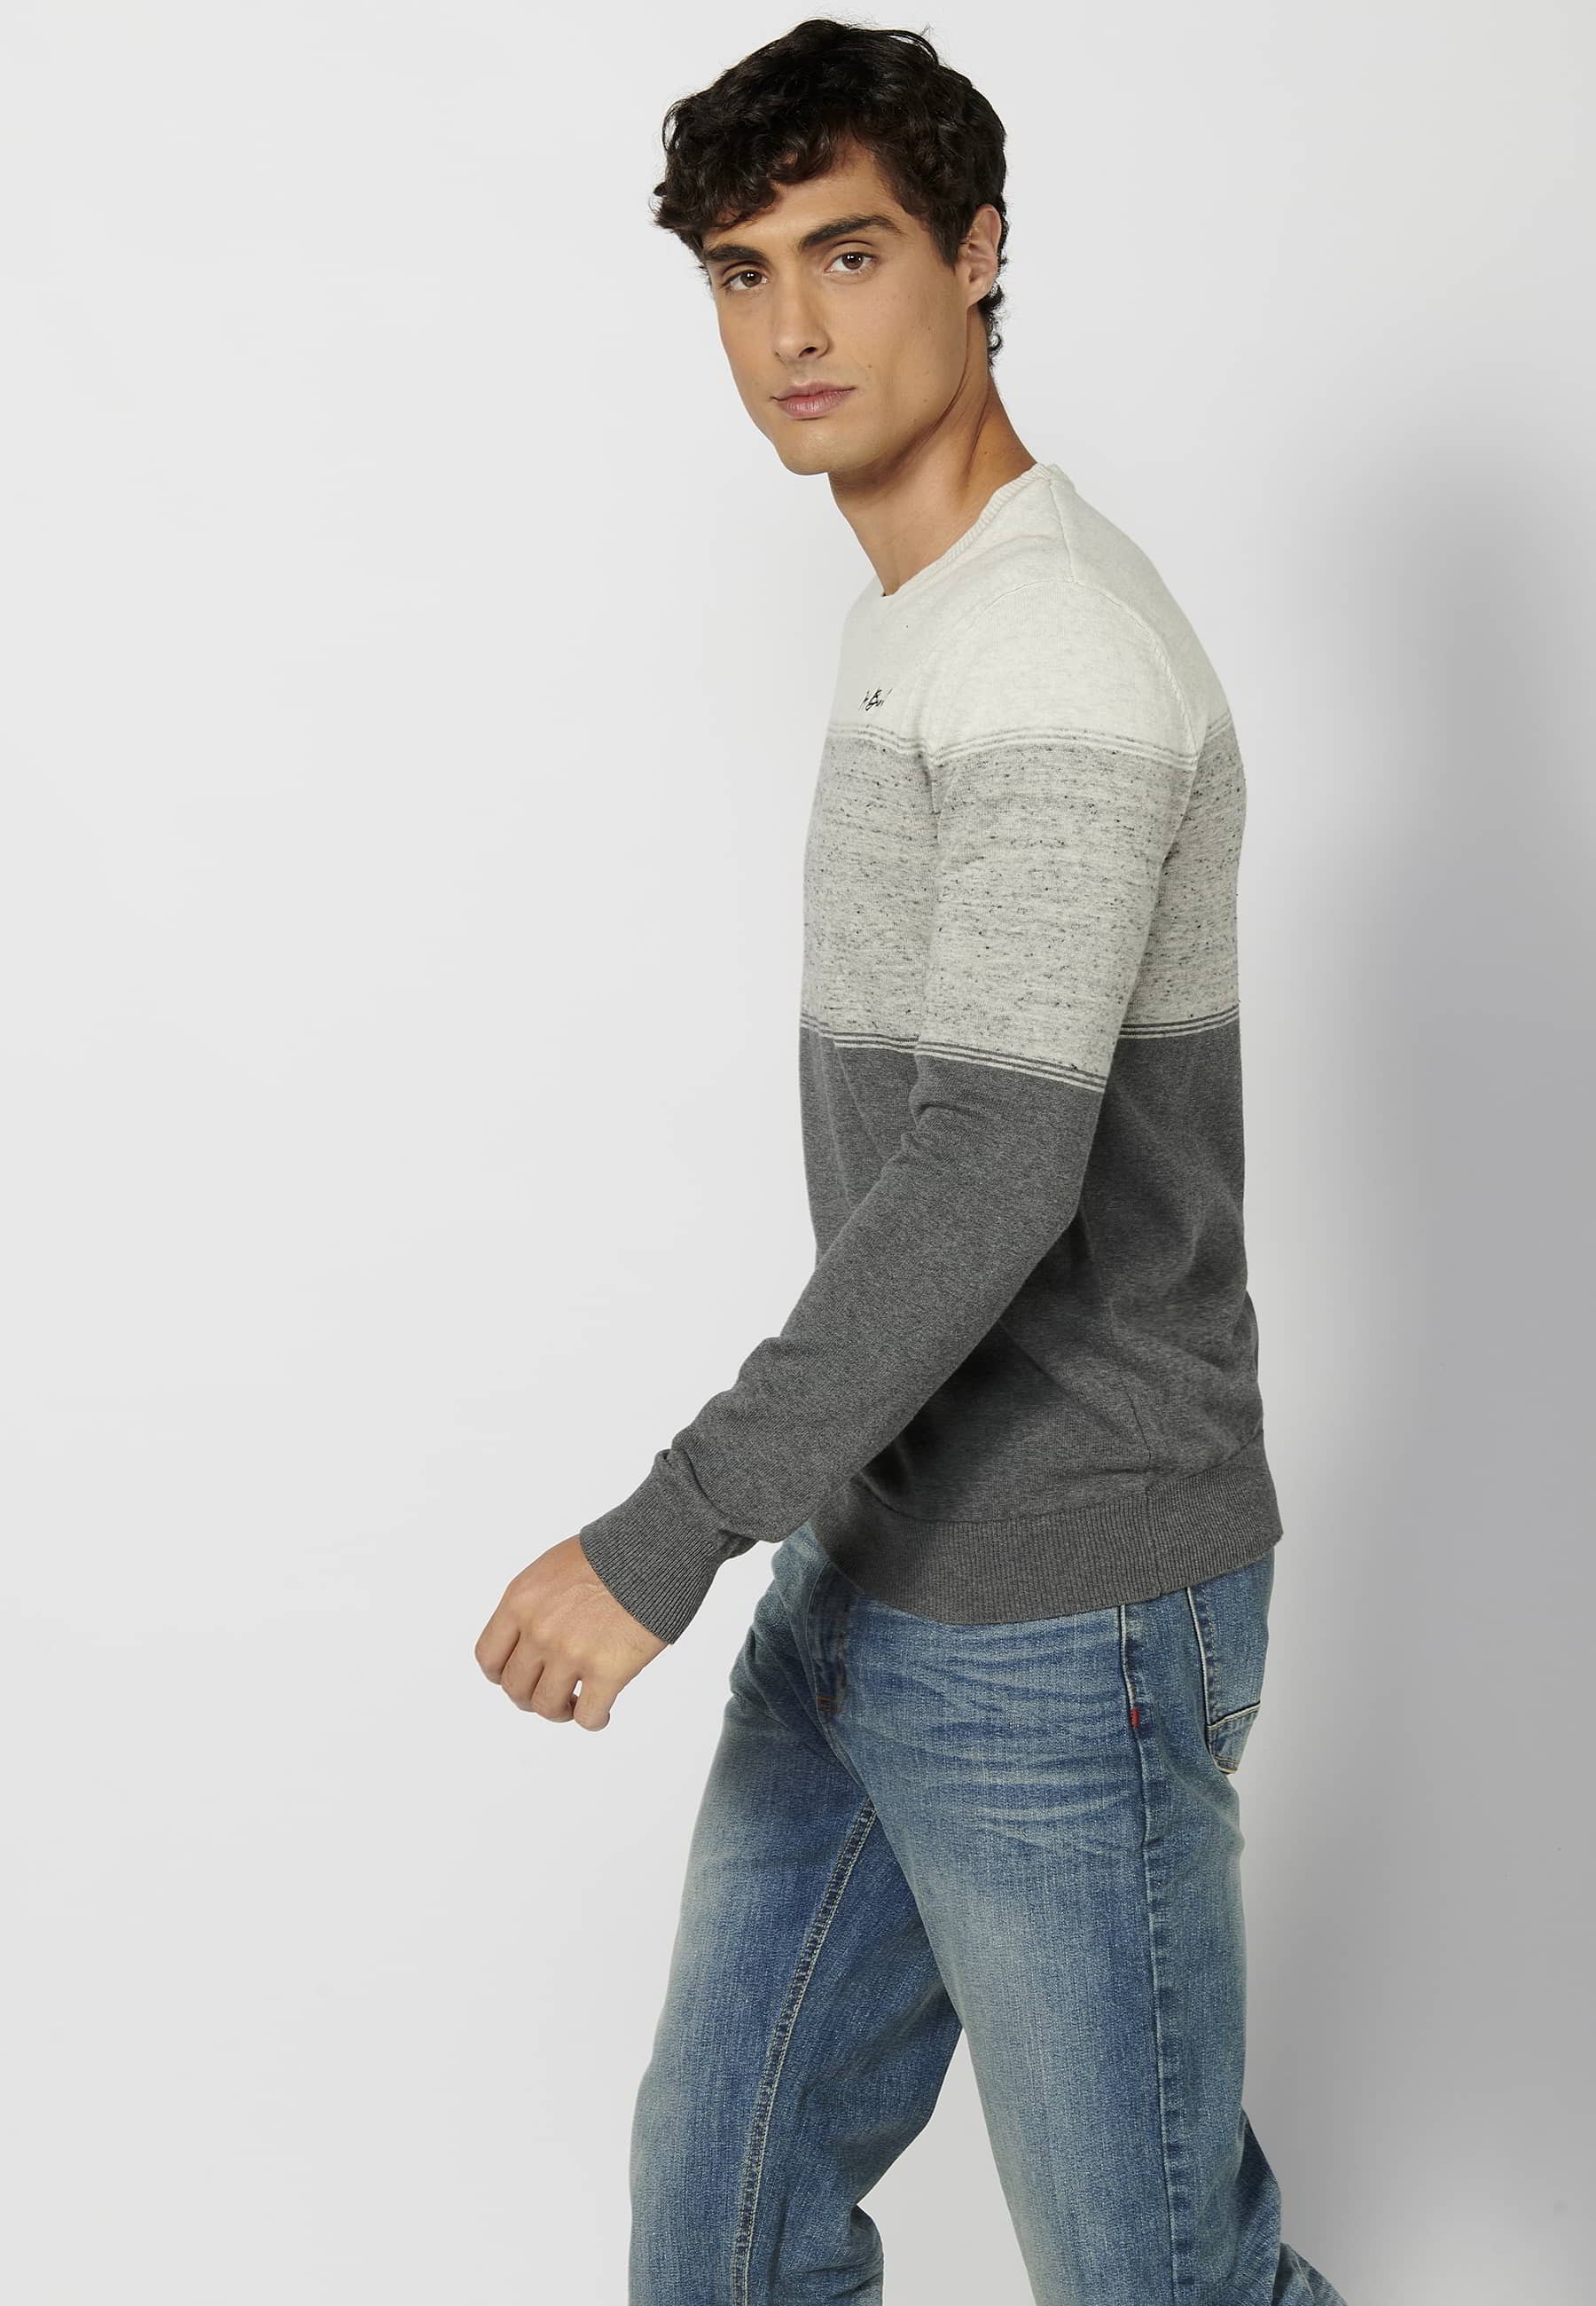 Jersey de punto de algodón manga larga cuello redondo color gris para hombre 1